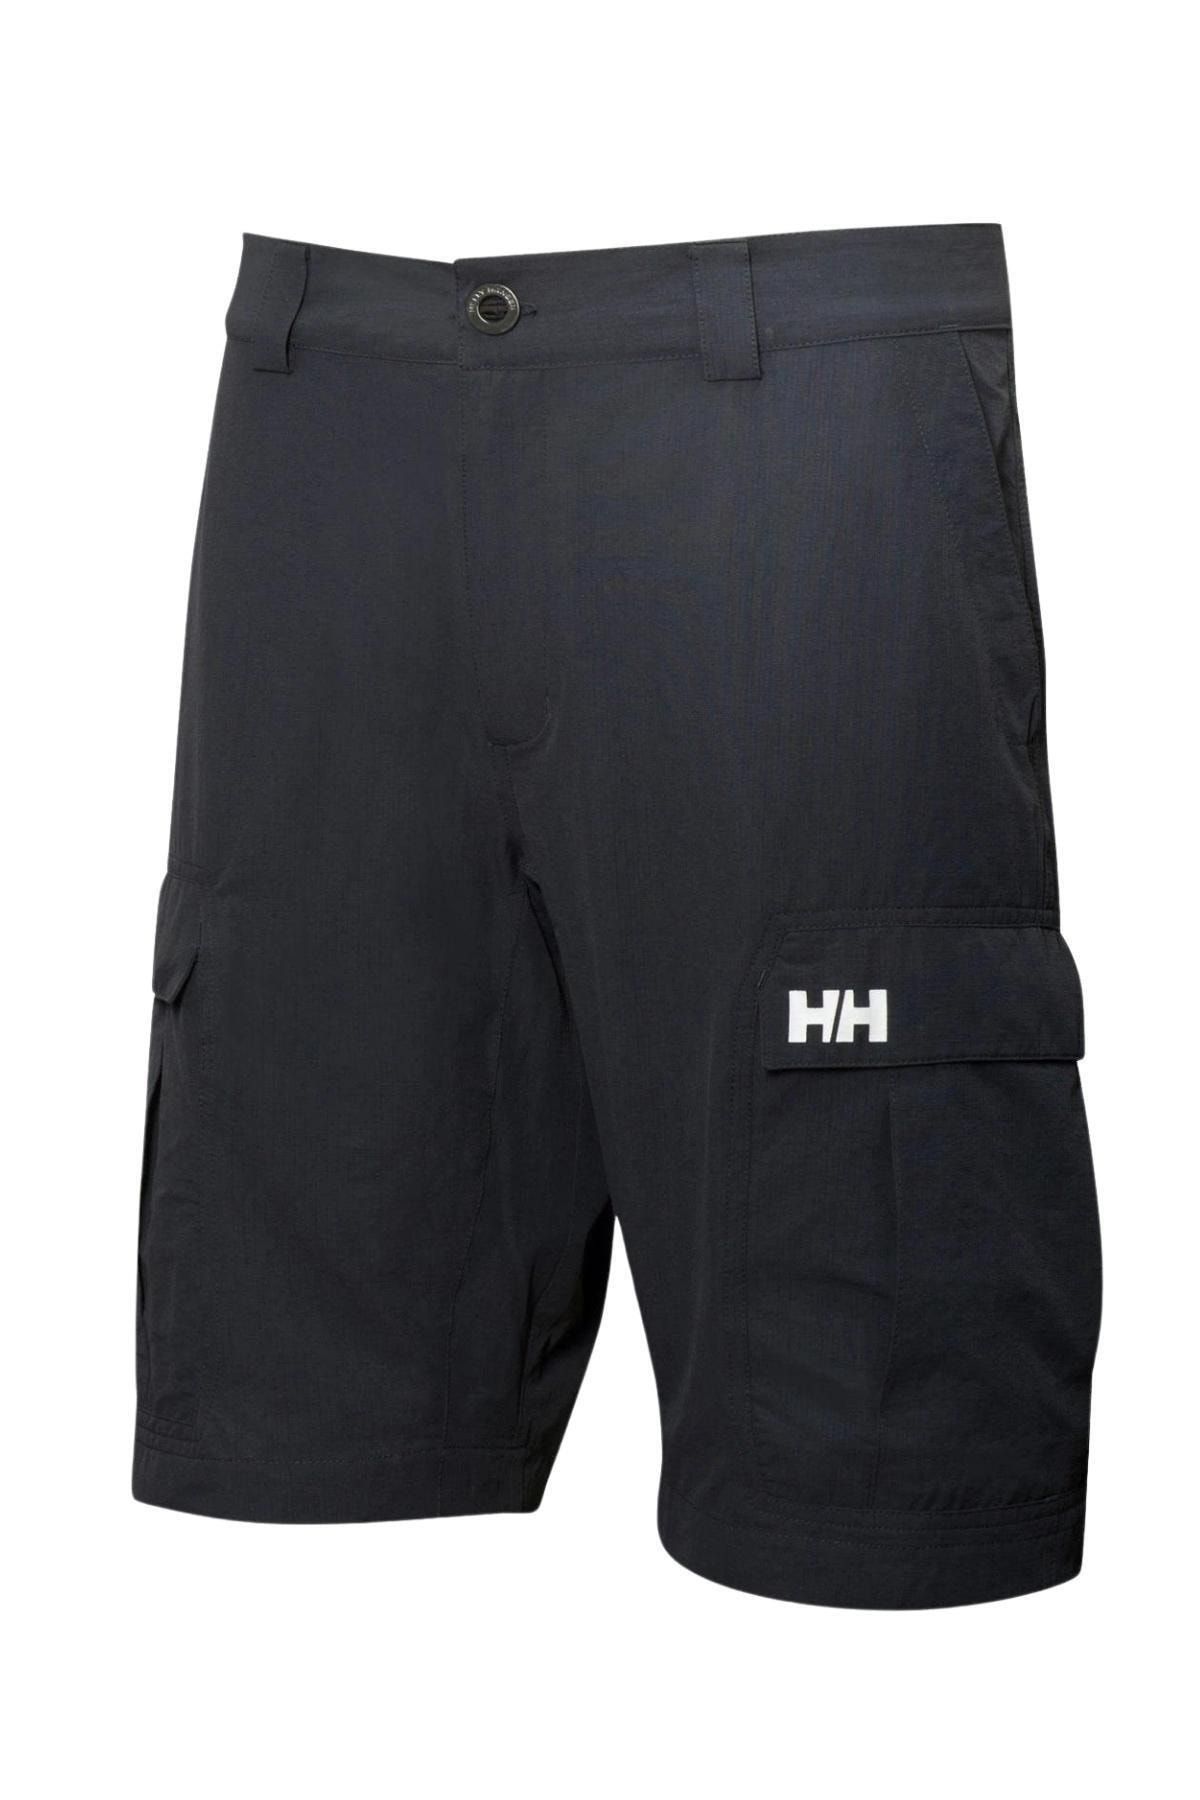 Helly Hansen Hha.54154 - Hh Qd Cargo Shorts 11